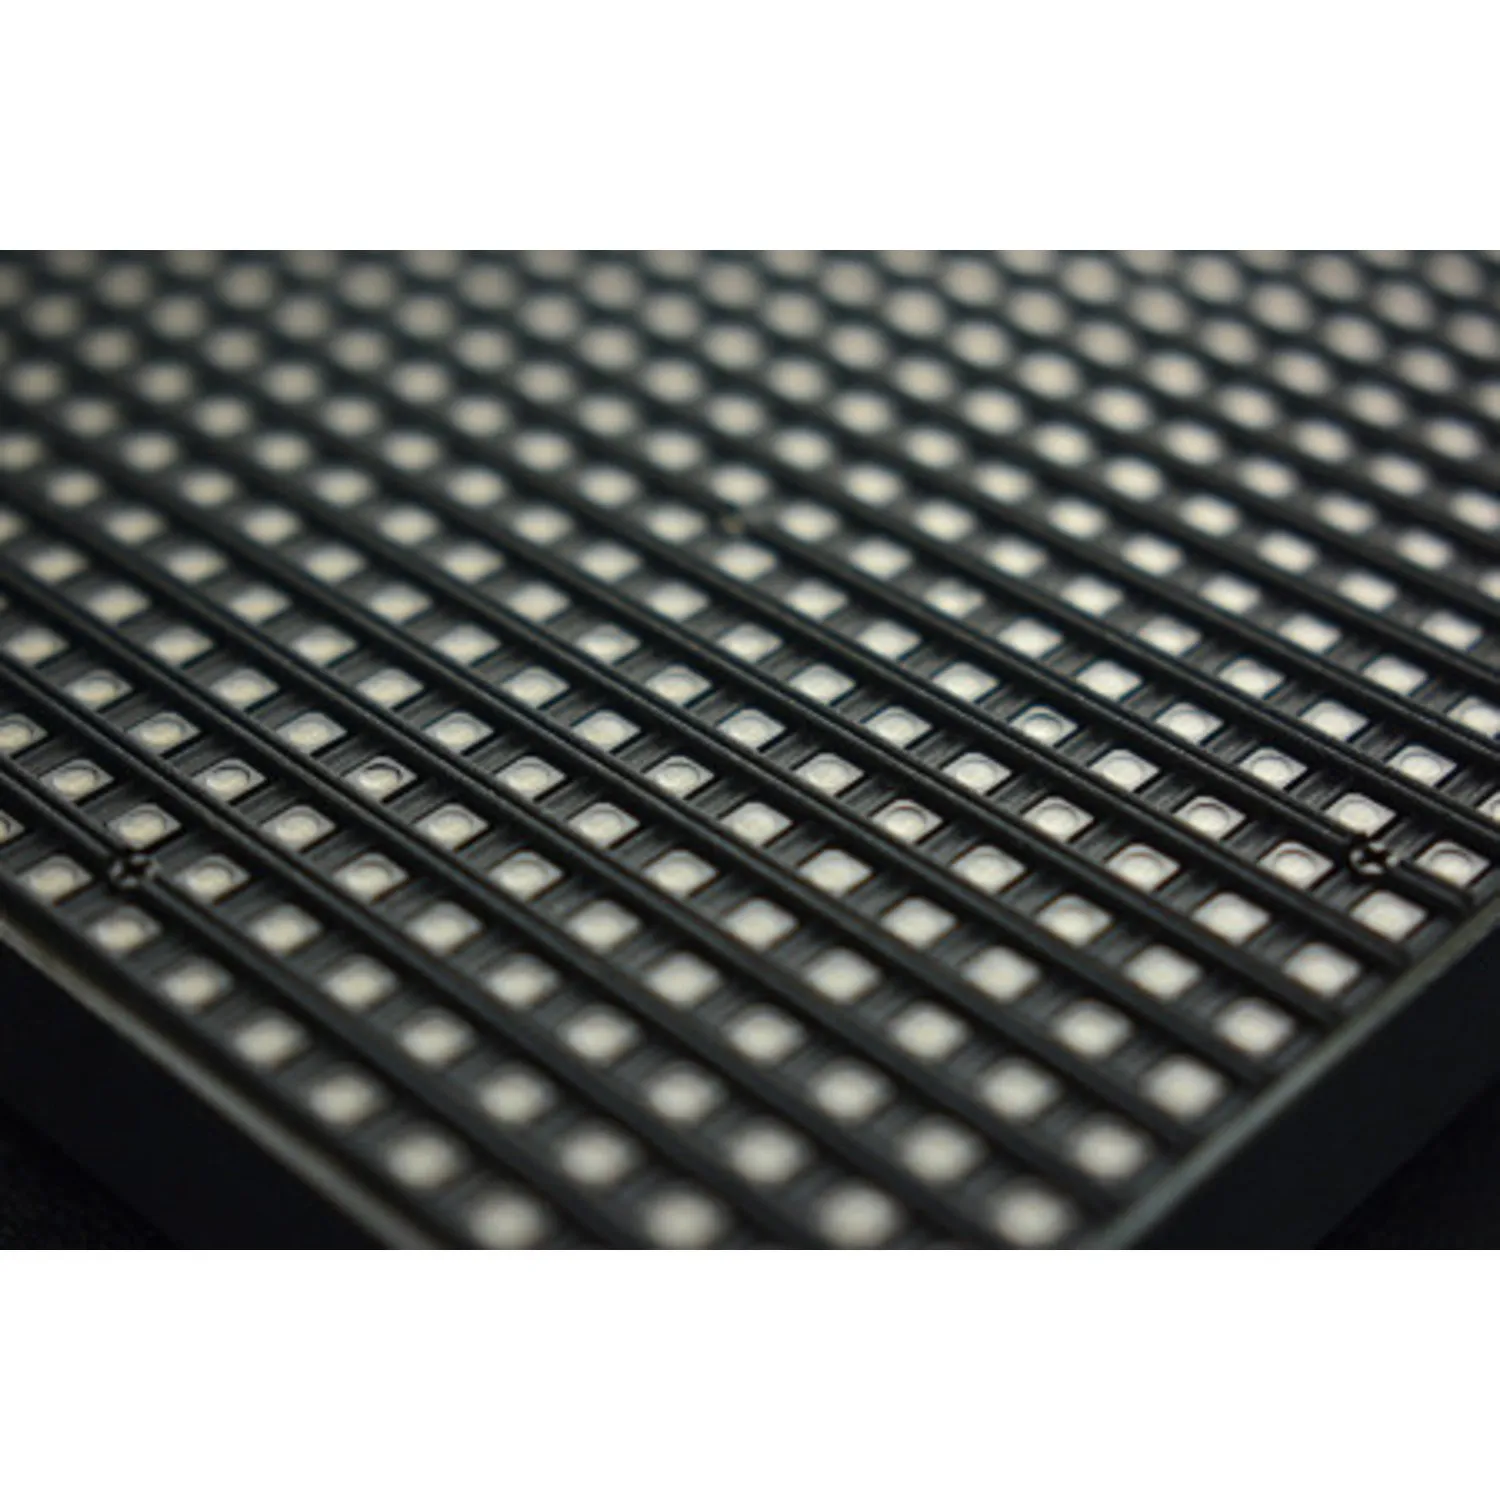 Photo of 32x32 RGB LED Matrix panel (4mm pitch)